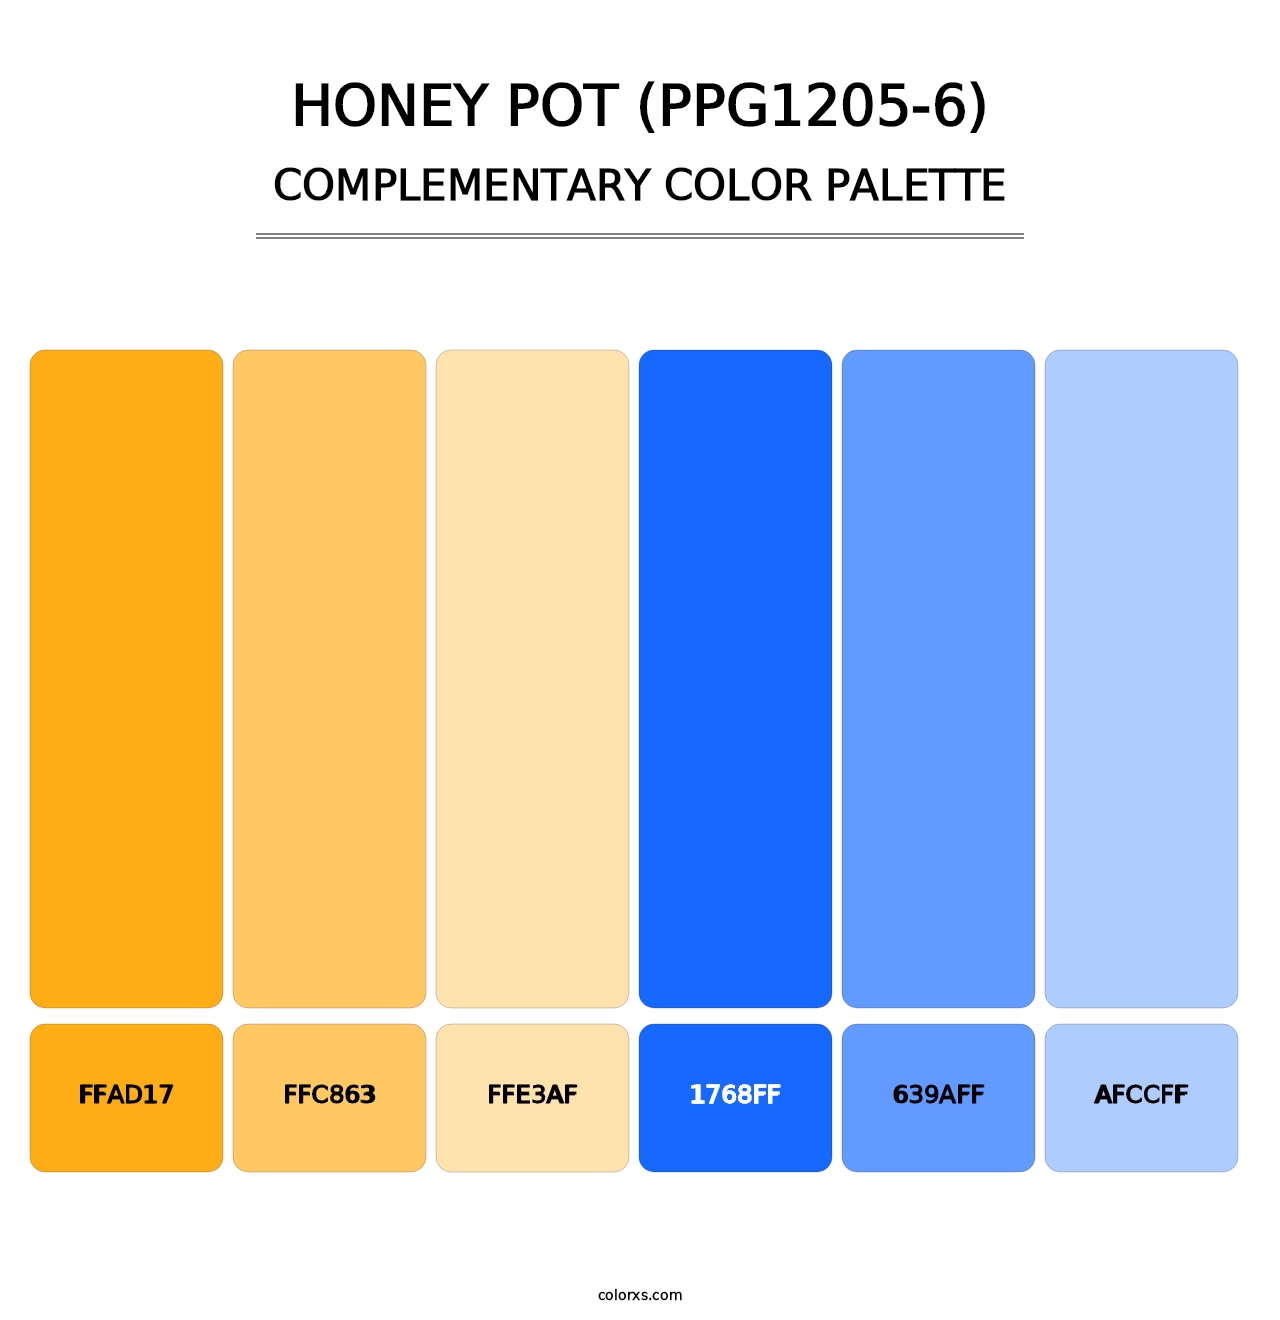 Honey Pot (PPG1205-6) - Complementary Color Palette